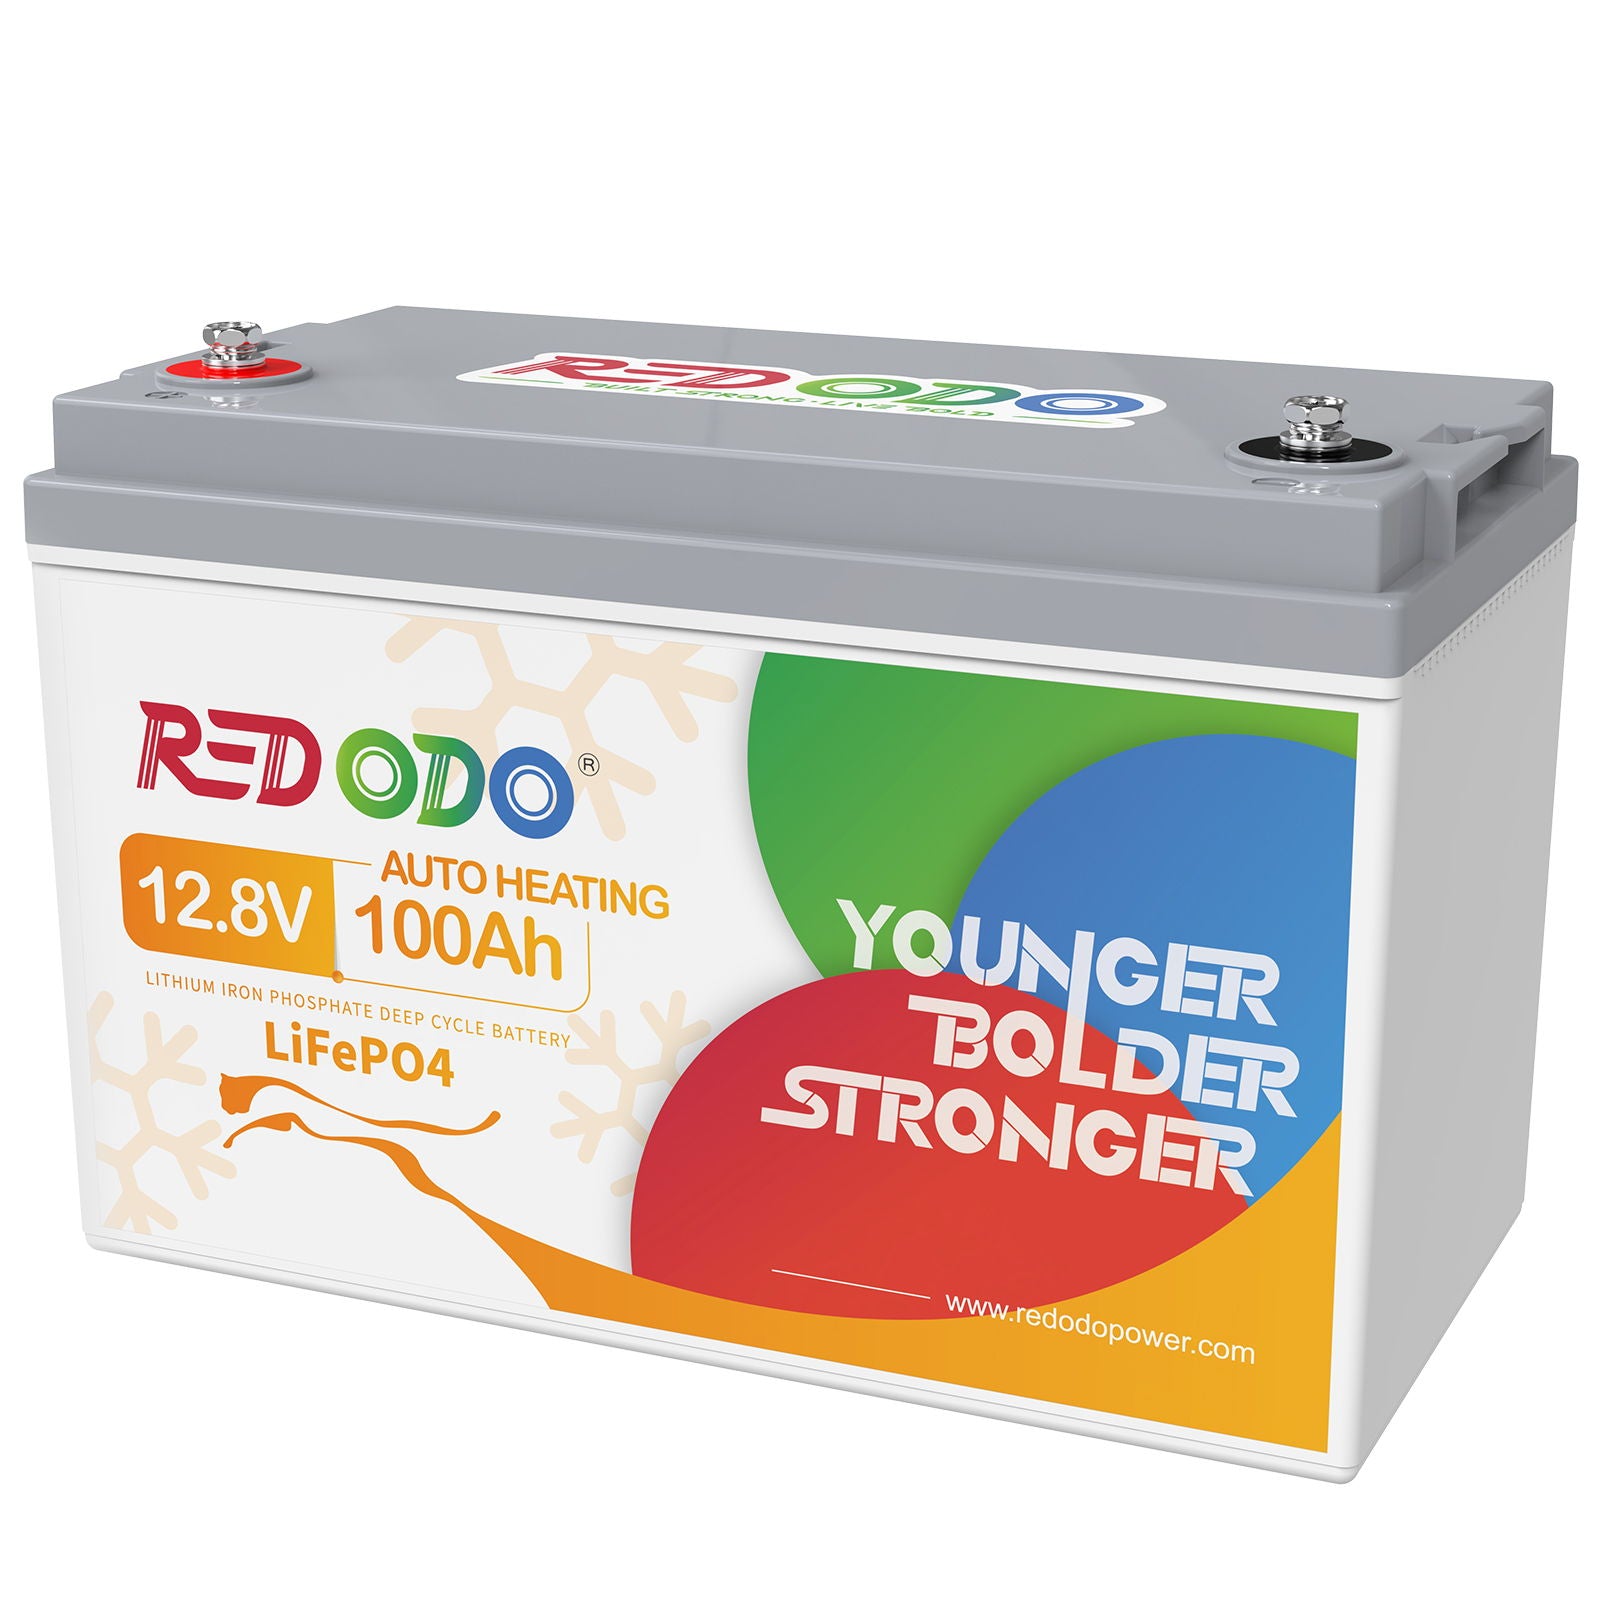 Redodo Portable Battery Box Redodo